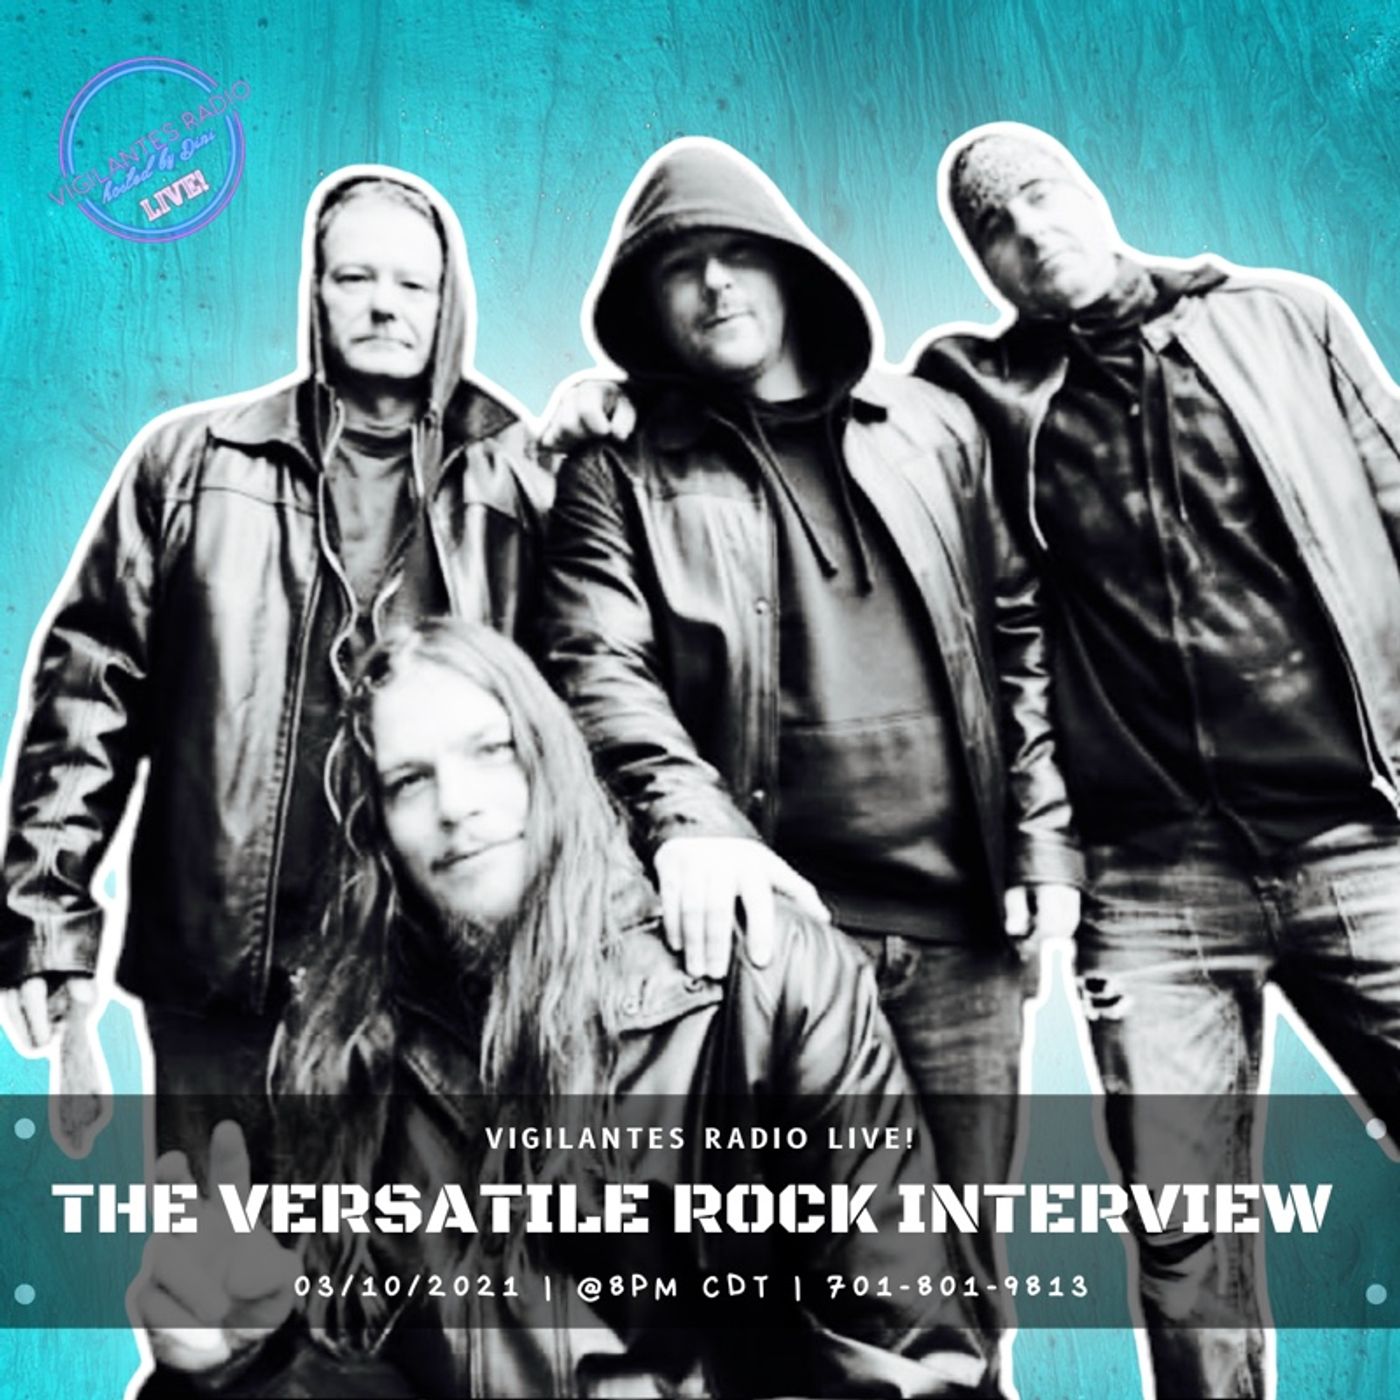 The Versatile Rock Interview. Image